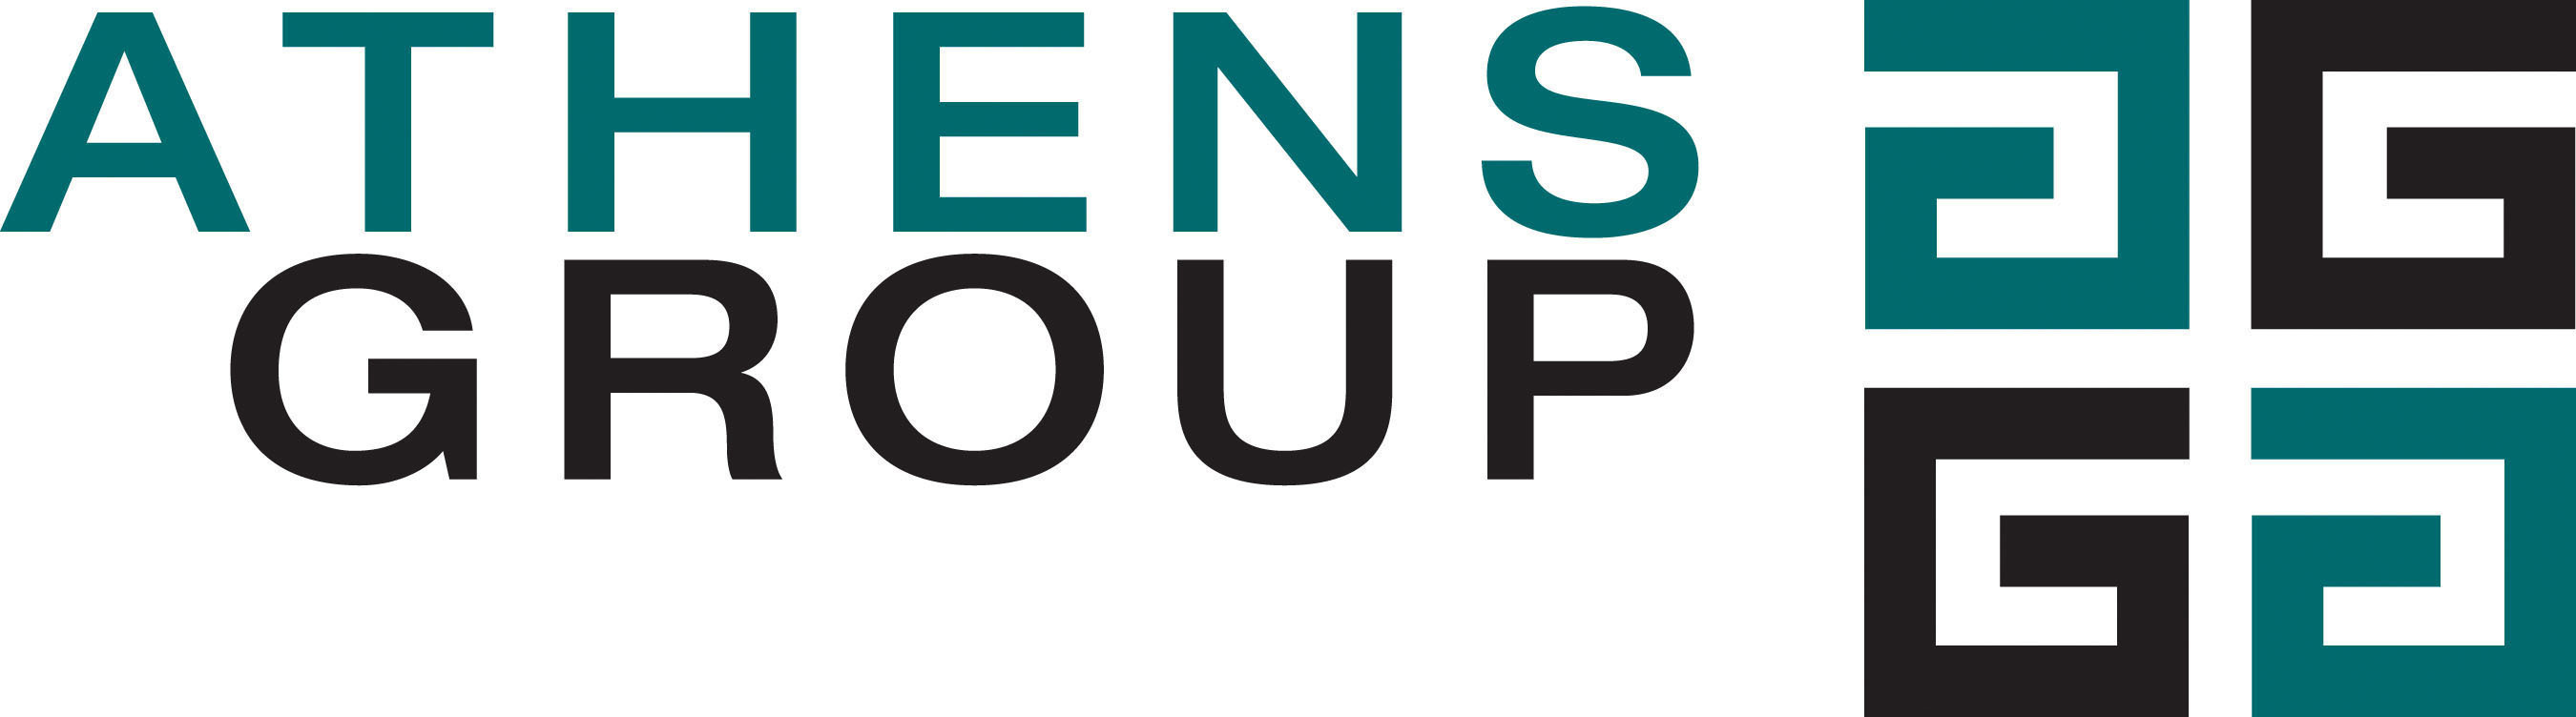 Athens Group logo.